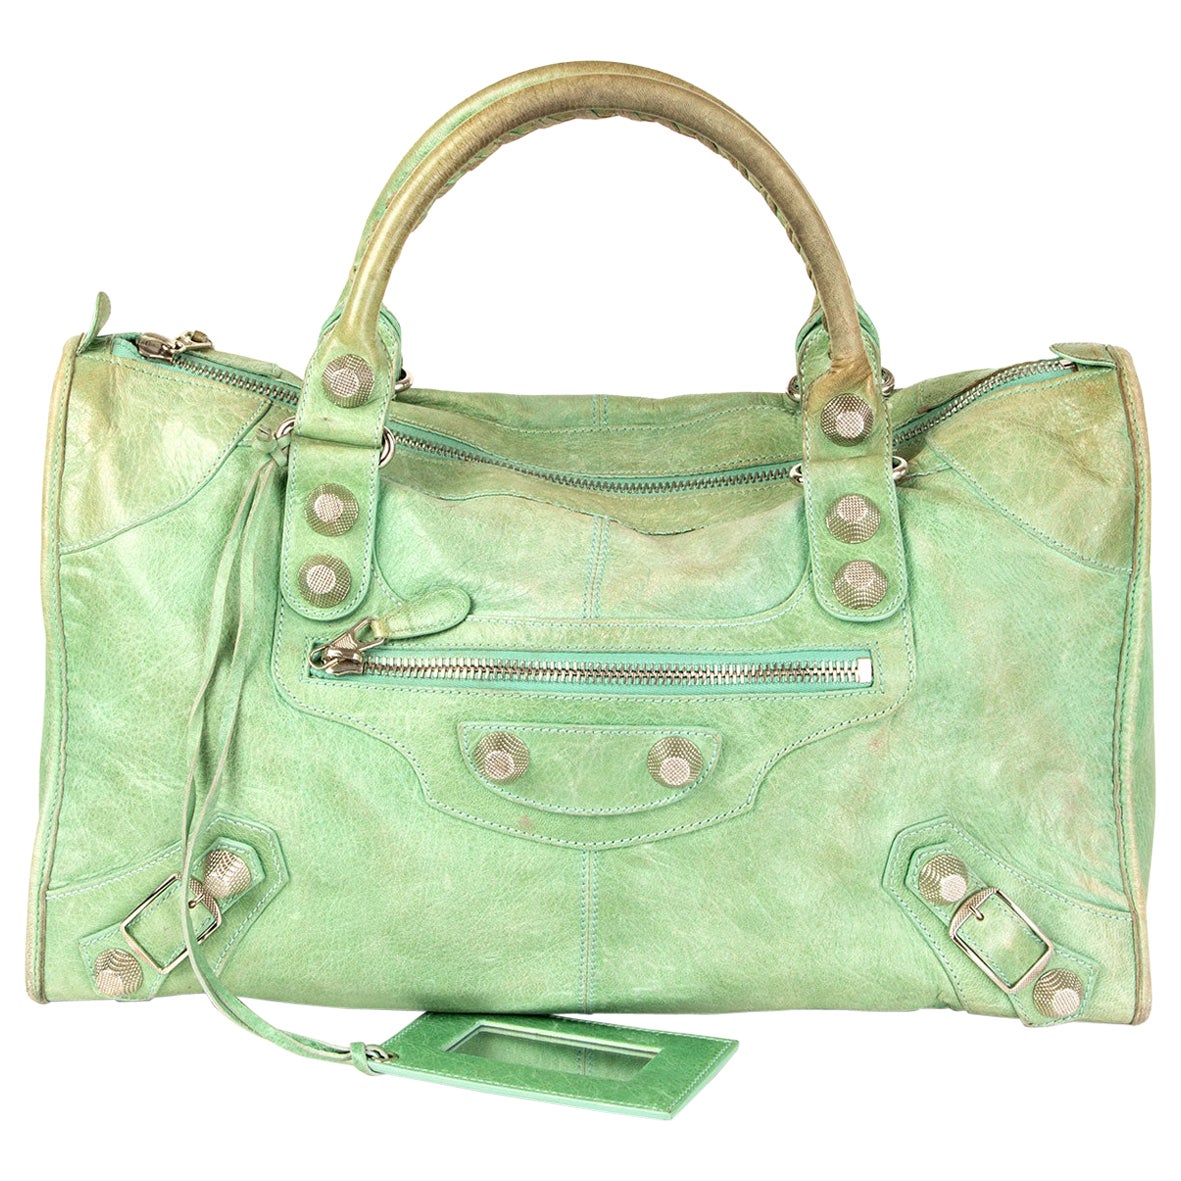 BALENCIAGA mint green distressed leather GIANT WORK Satchel Bag